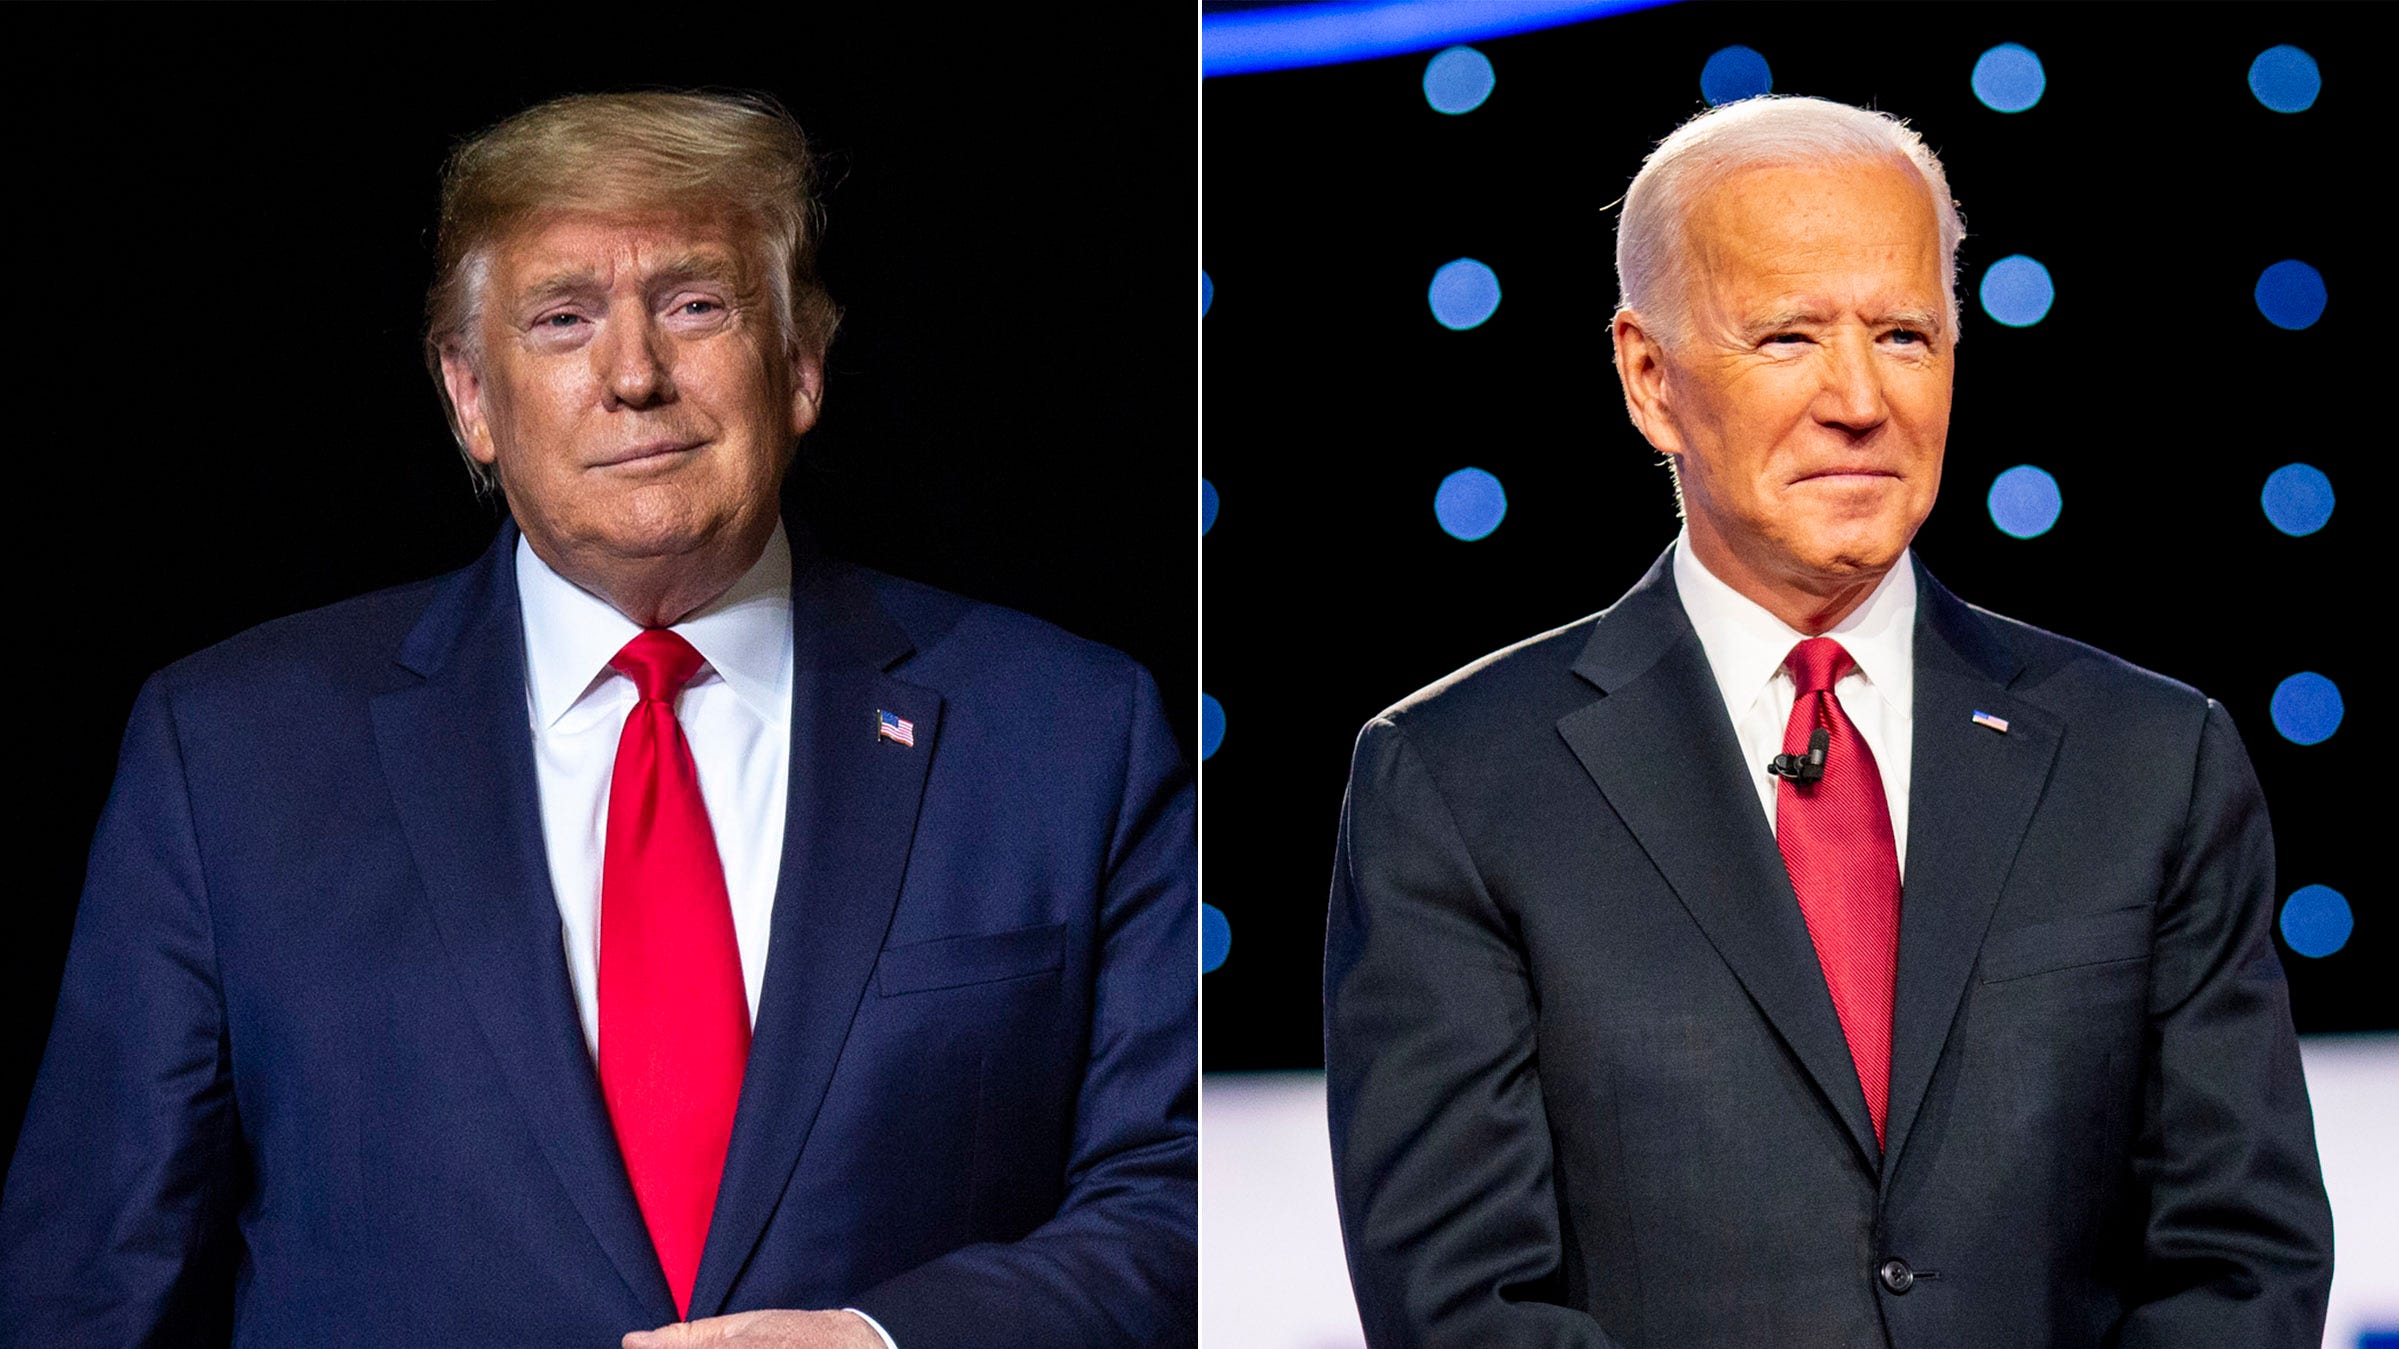 Trump vs Biden: This ‘presidential predictor’ forecasts a Biden win